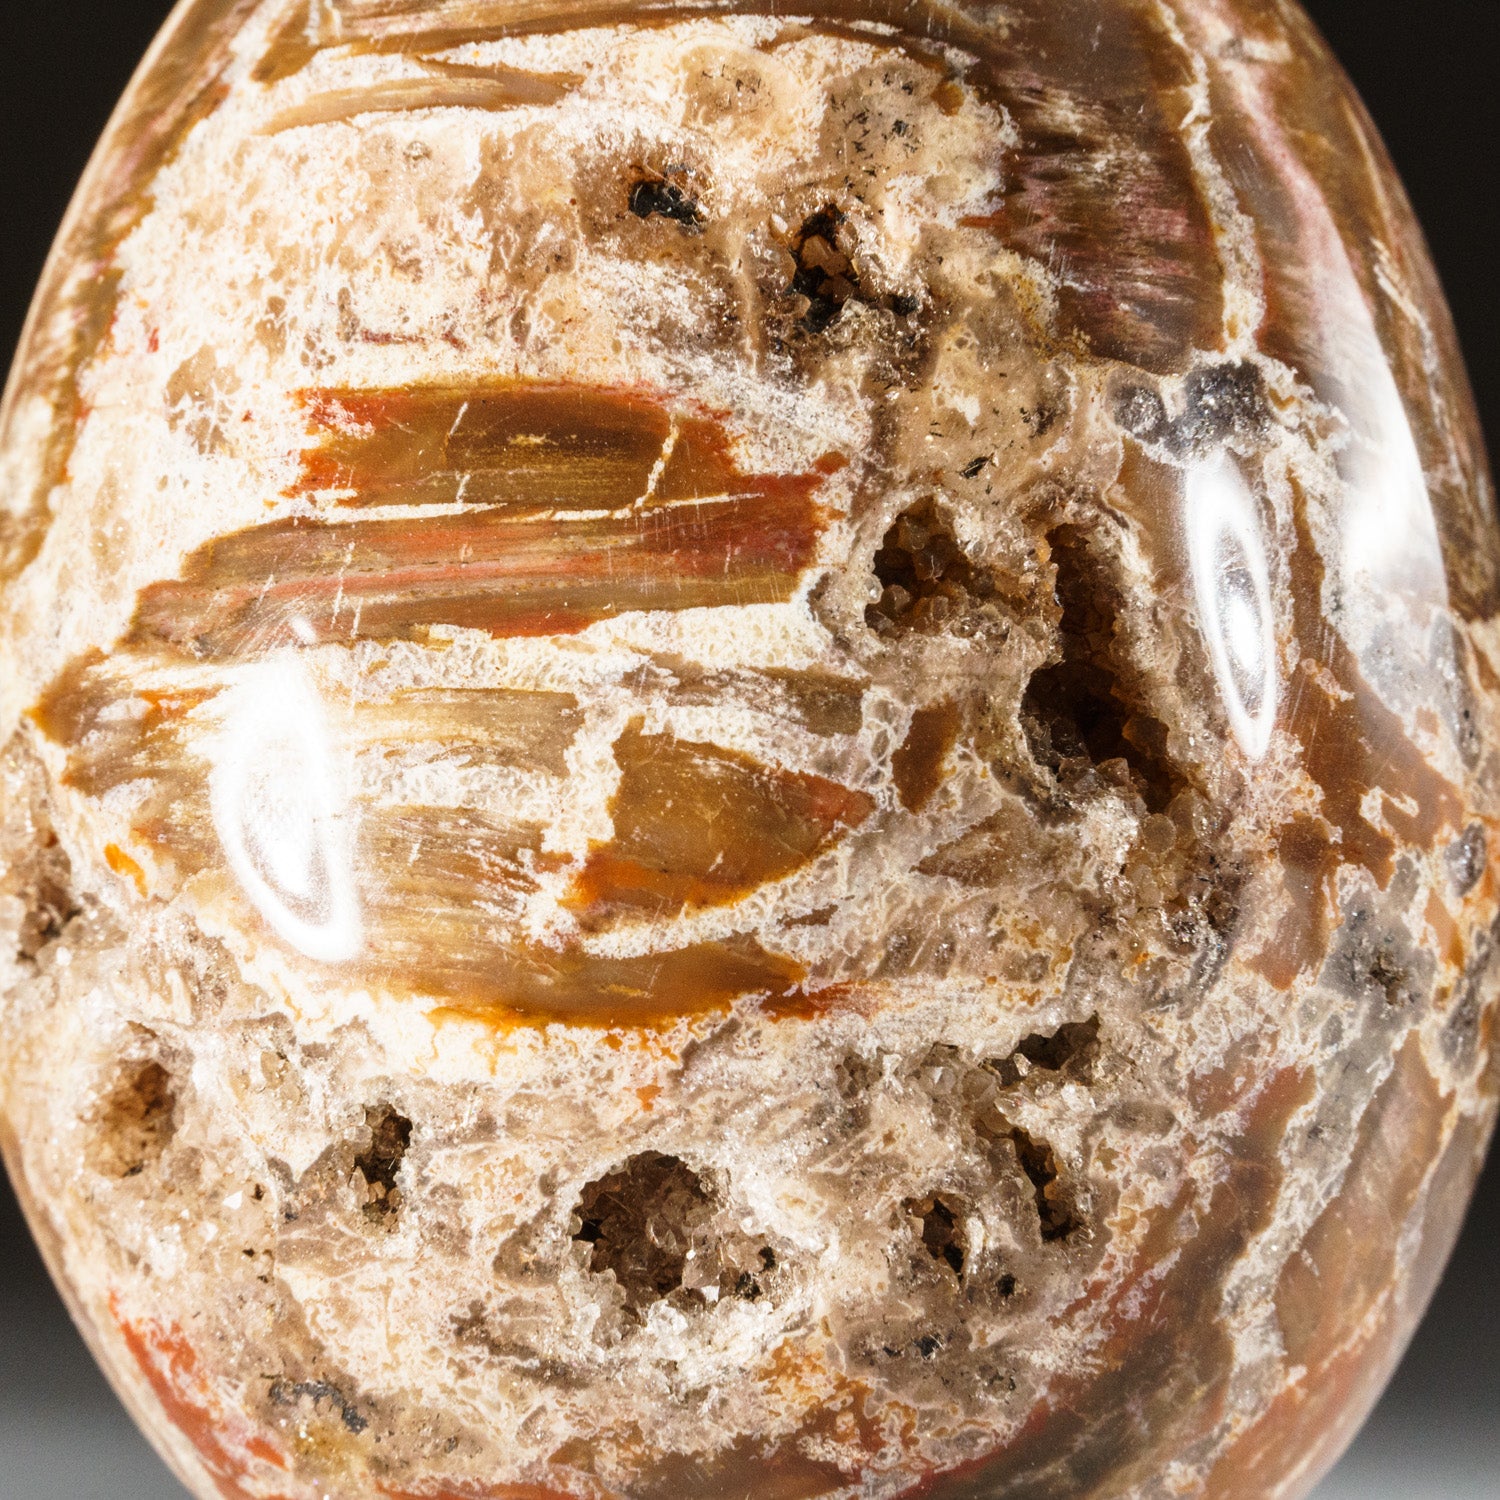 Polished Petrified Wood Egg from Madagascar (.8 lbs)